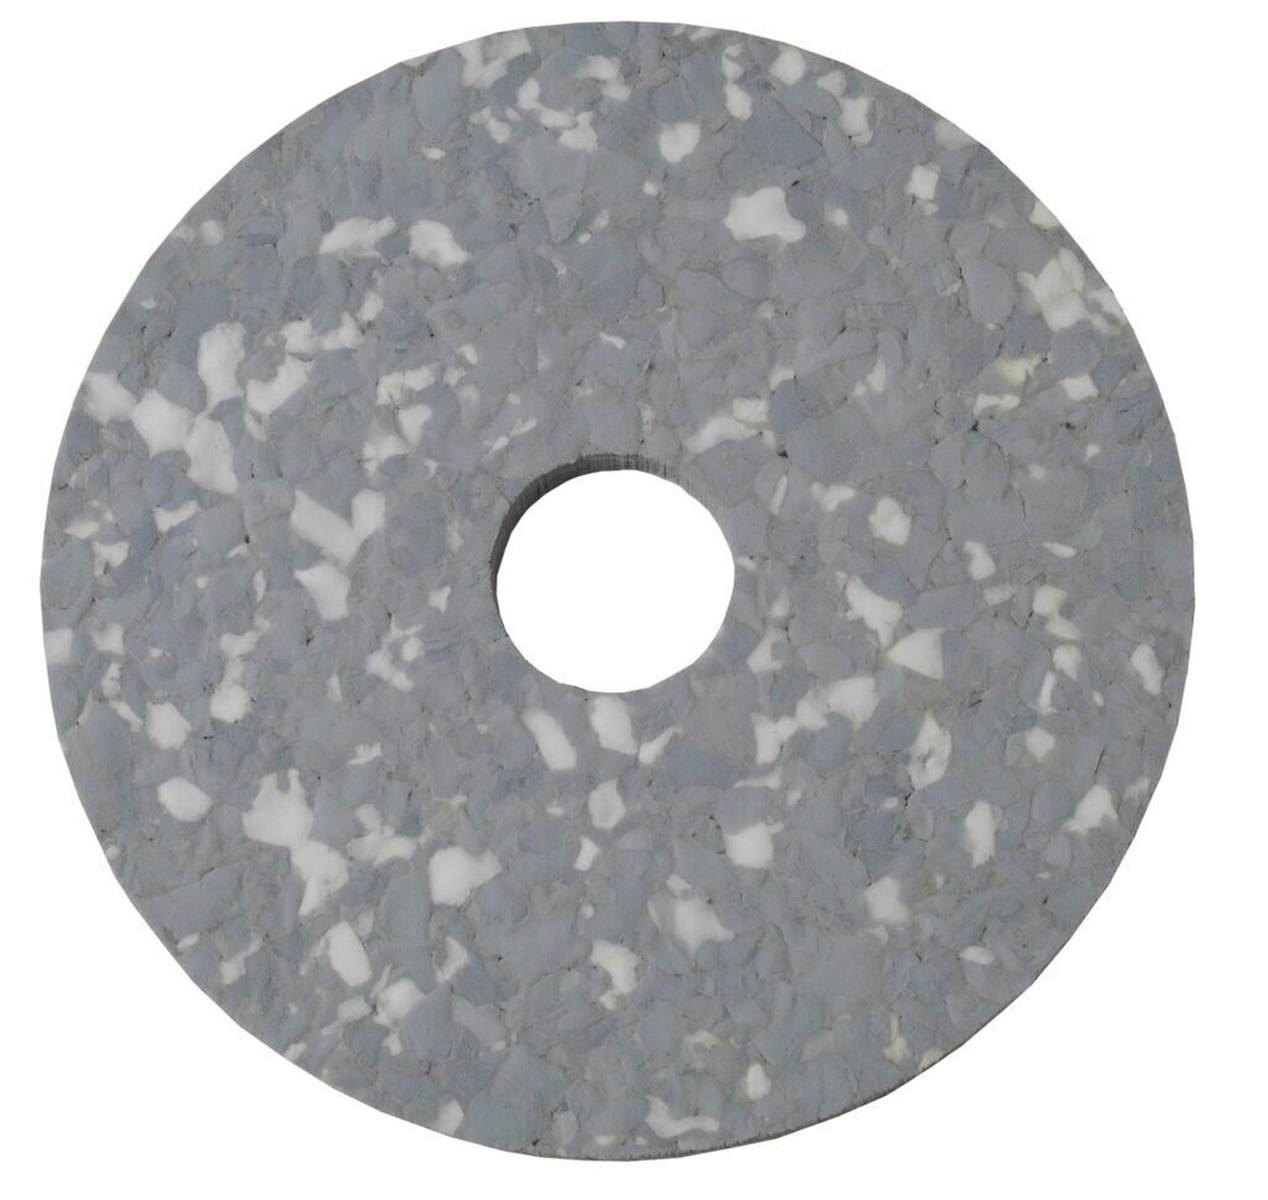 3M Scotch-Brite melamine machine pad, gray / white, 330 mm